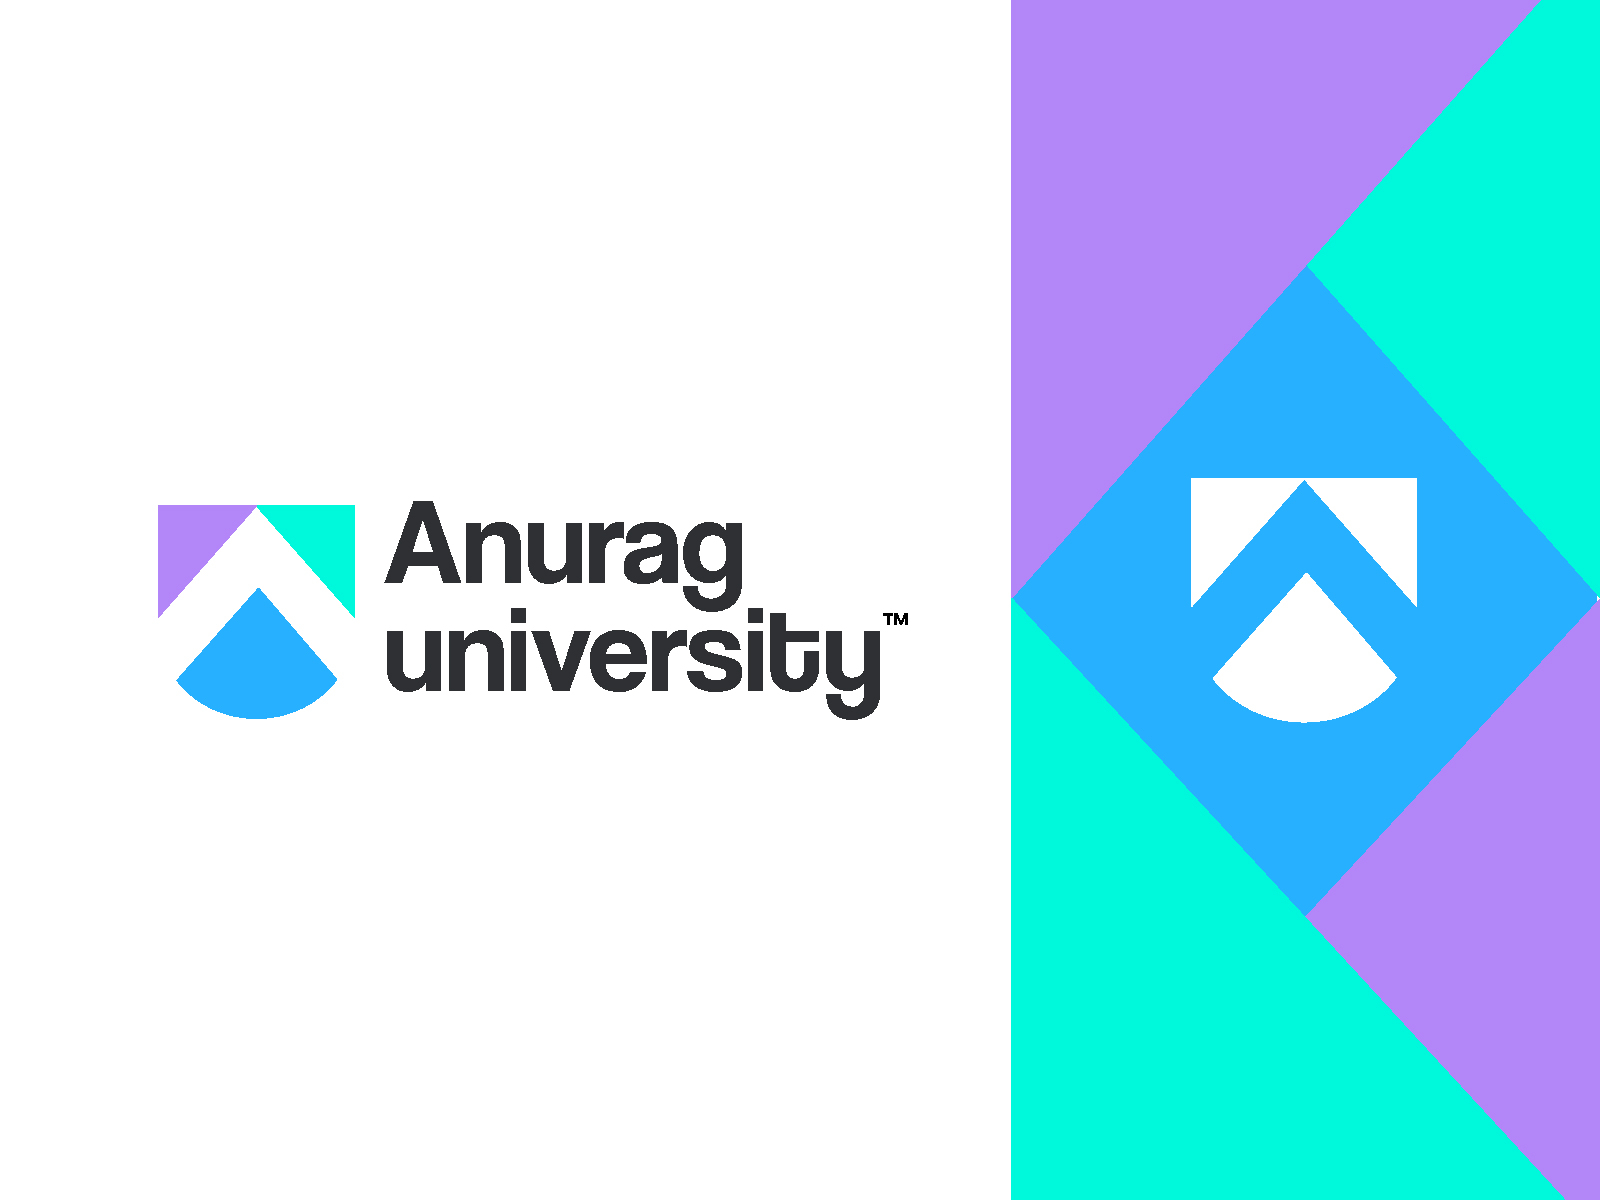 ANURAG brand logo #logo #shorts #smartart - YouTube